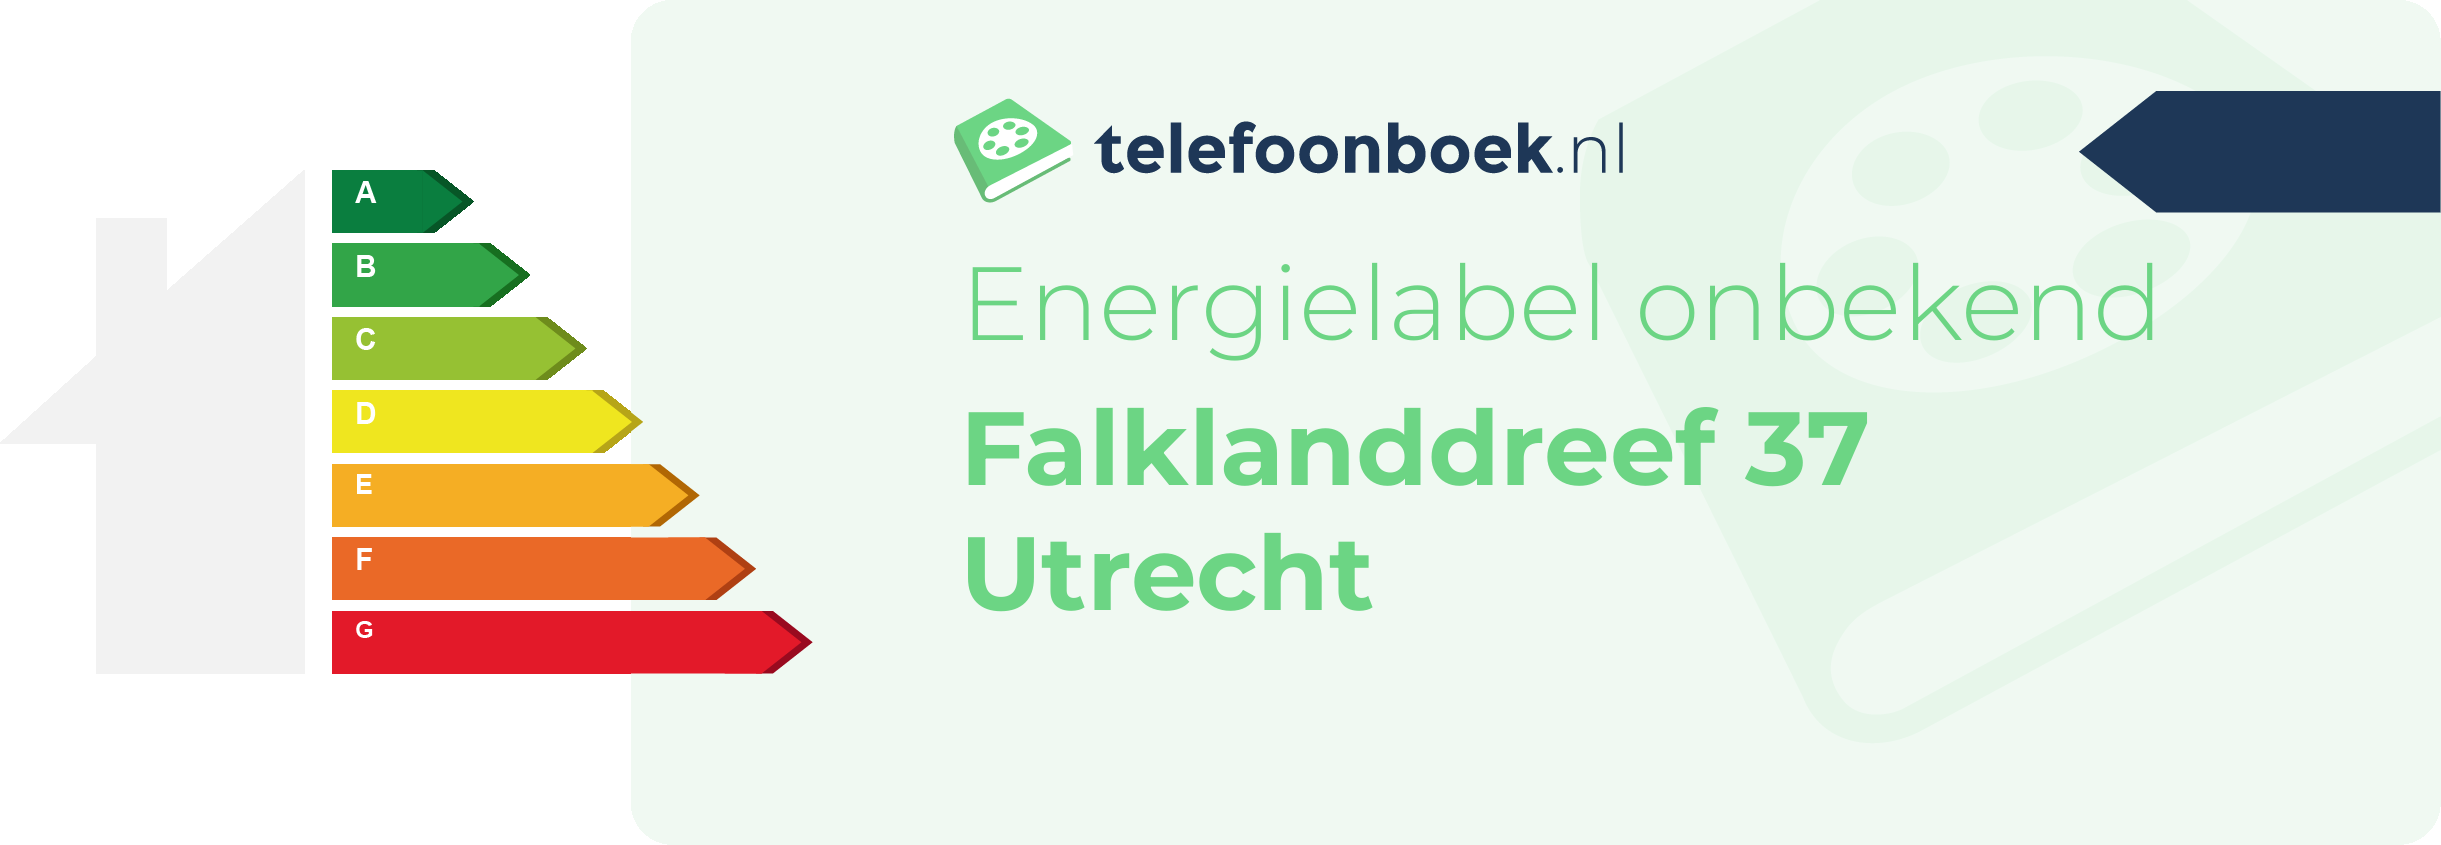 Energielabel Falklanddreef 37 Utrecht